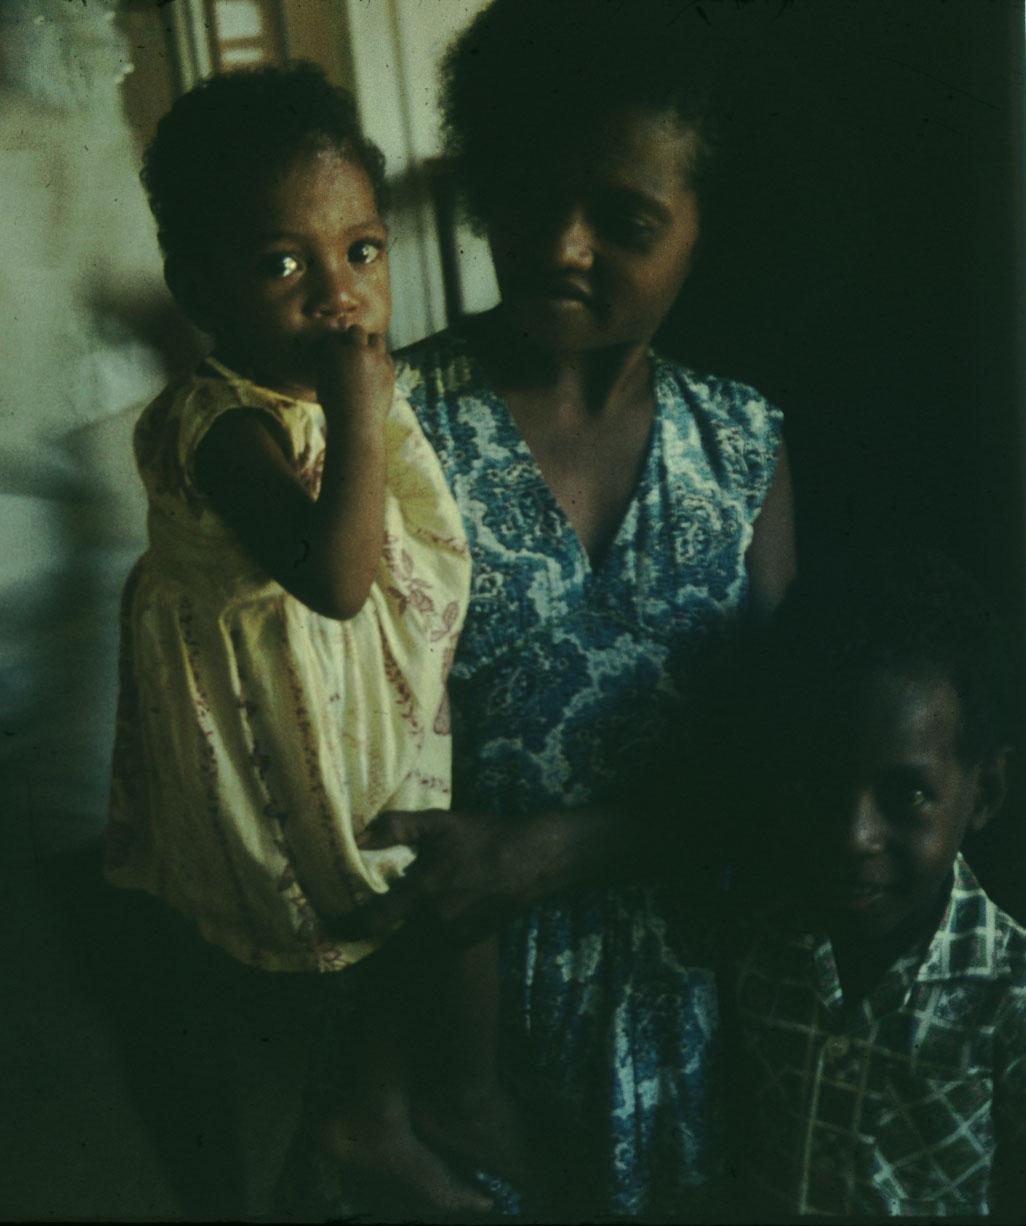 BD/144/320 - 
Groepsfoto moeder met twee kinderen
